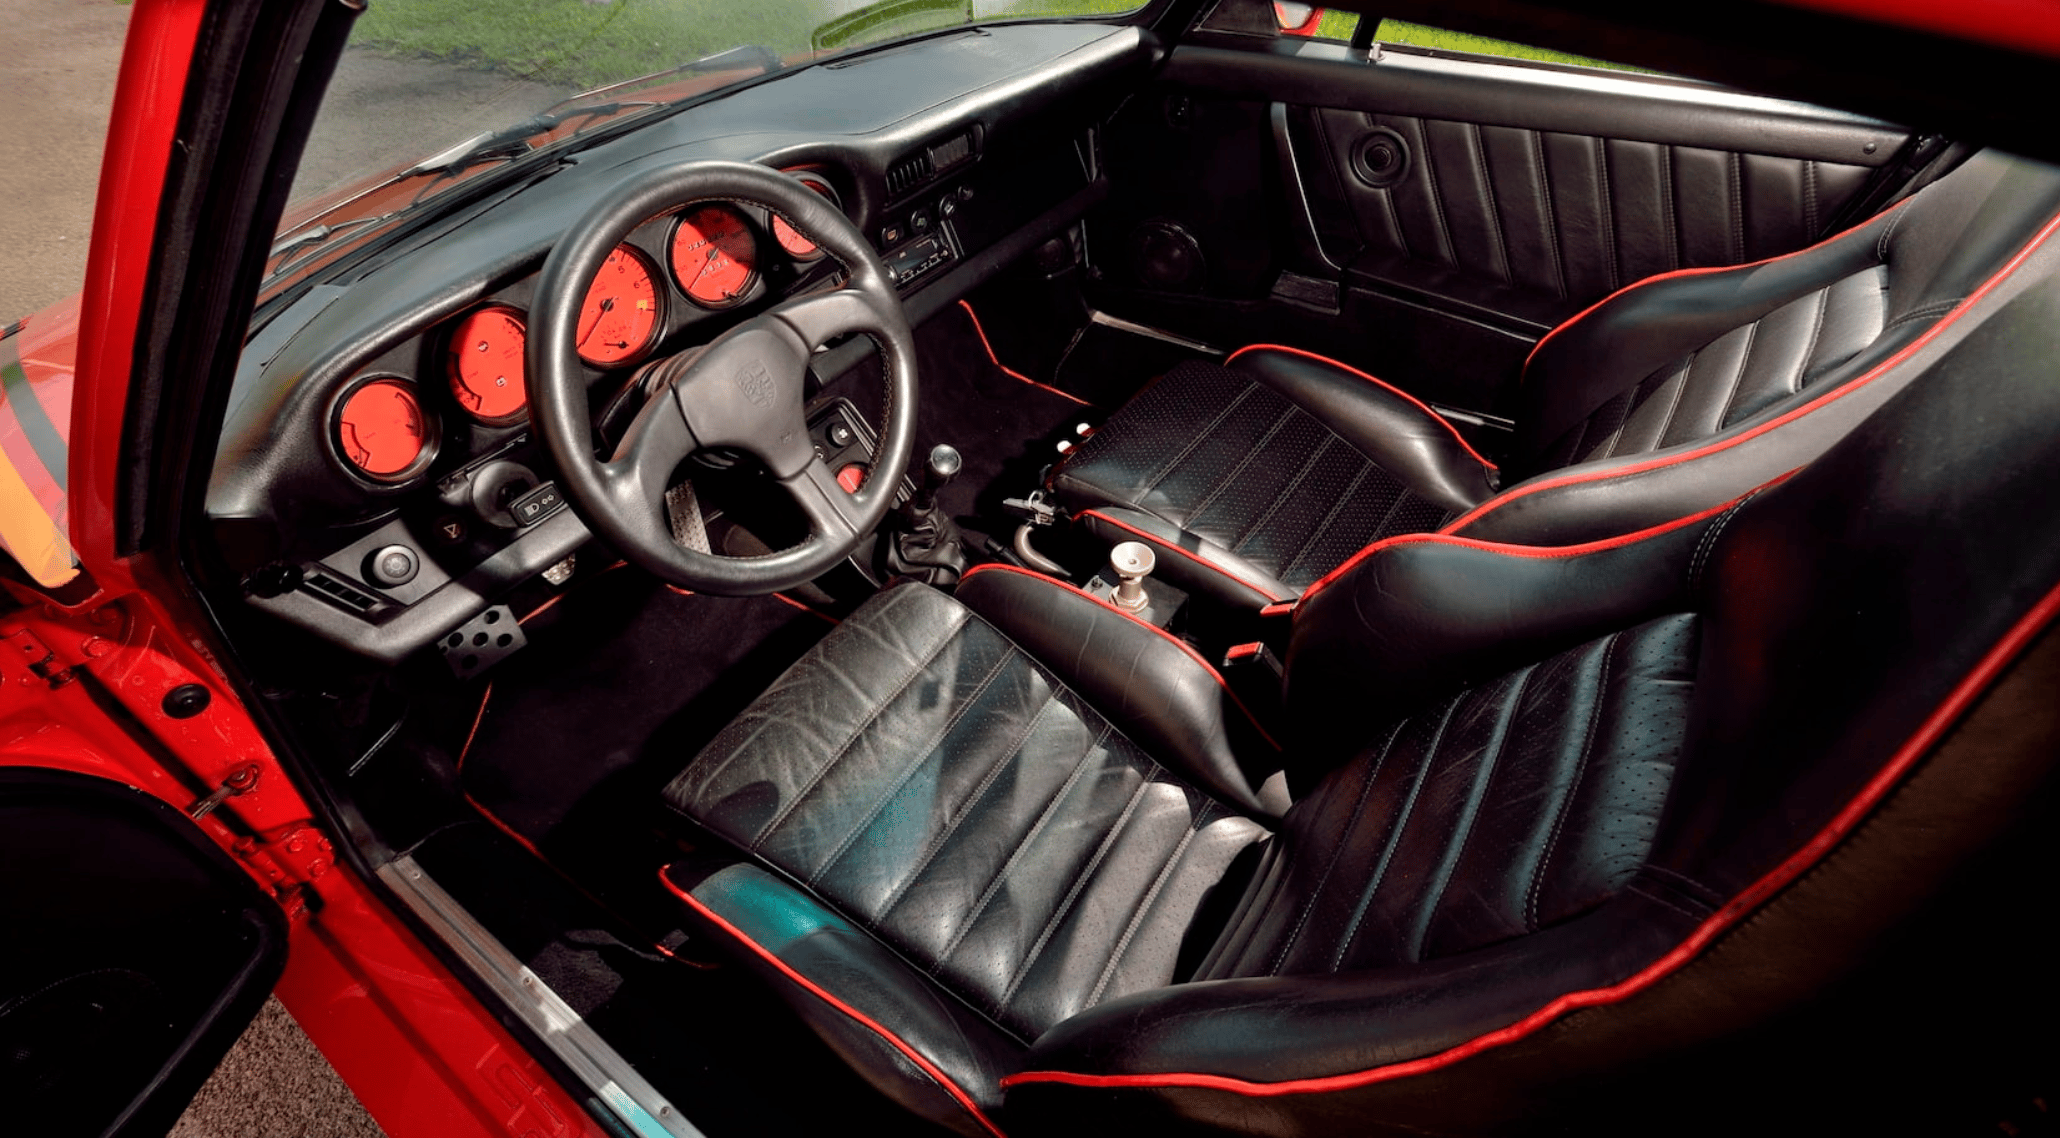 1982 Porsche 911 Turbo DP 1 935 (930) | Ruf BTR engine | Speed record car for Car & Driver Magazine | Classic livery | Gorgeous condition